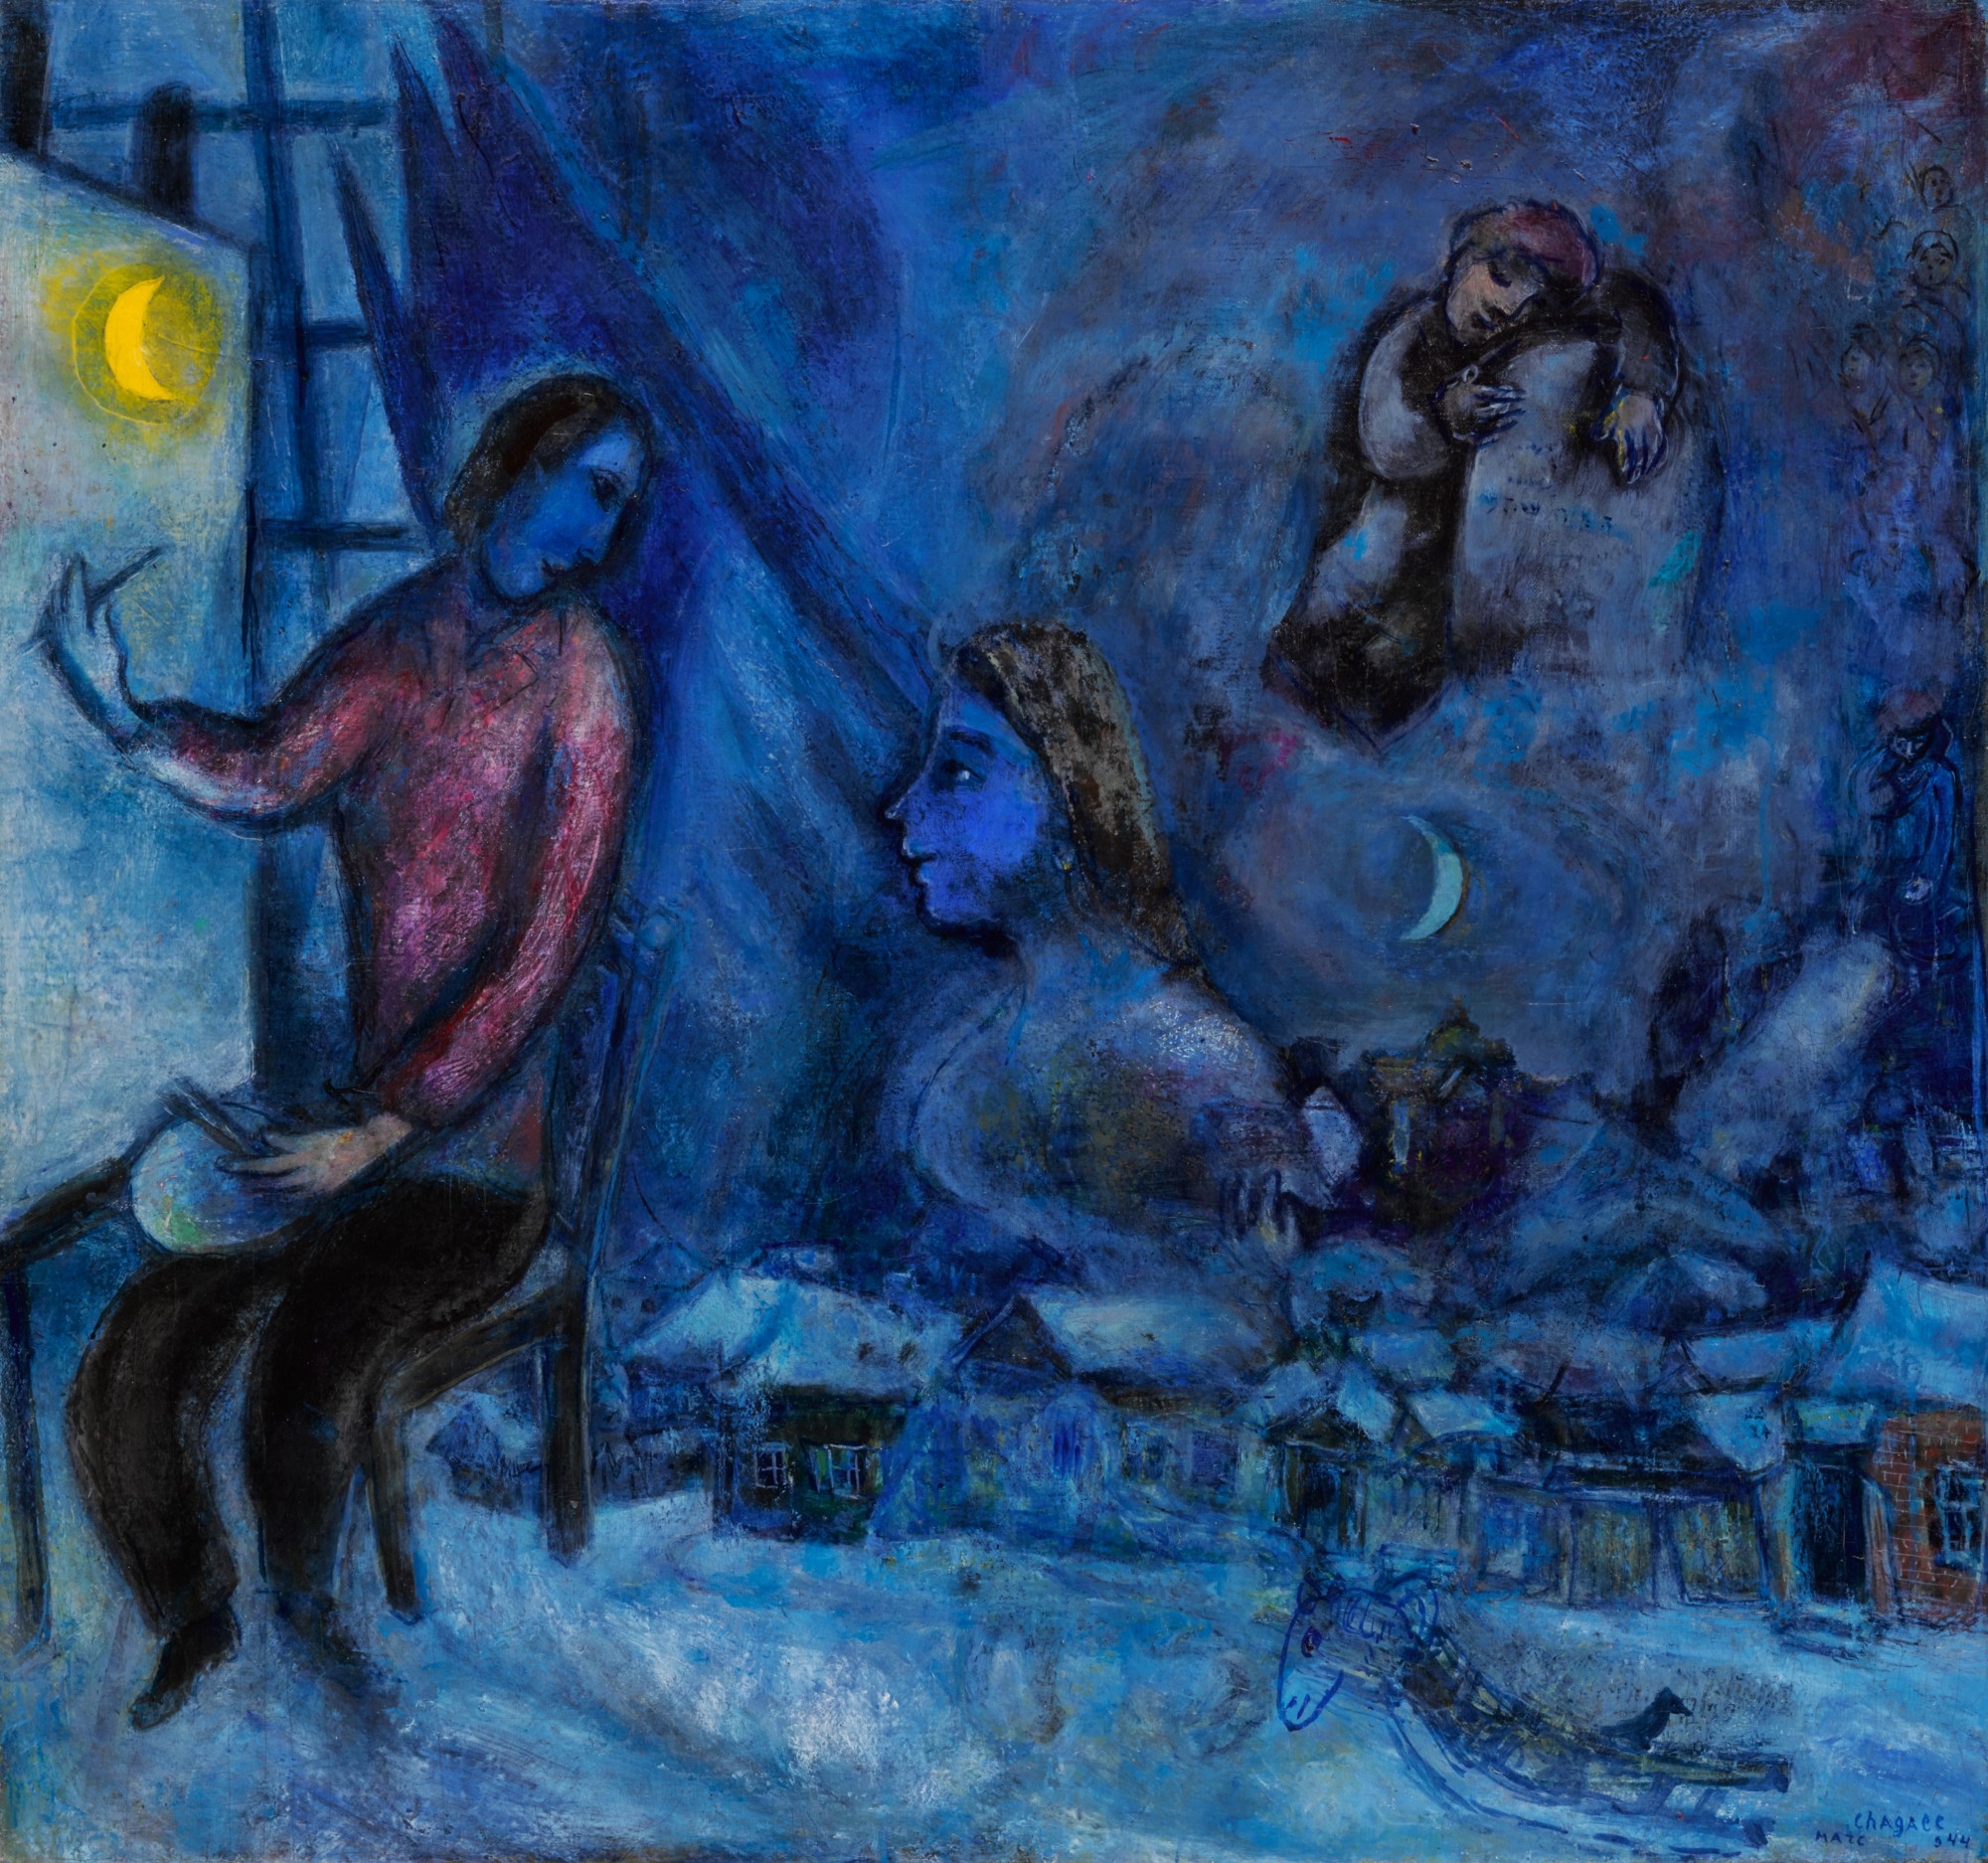 Artwork by Marc Chagall, Hommage au passé (La Ville), Made of Oil on canvas